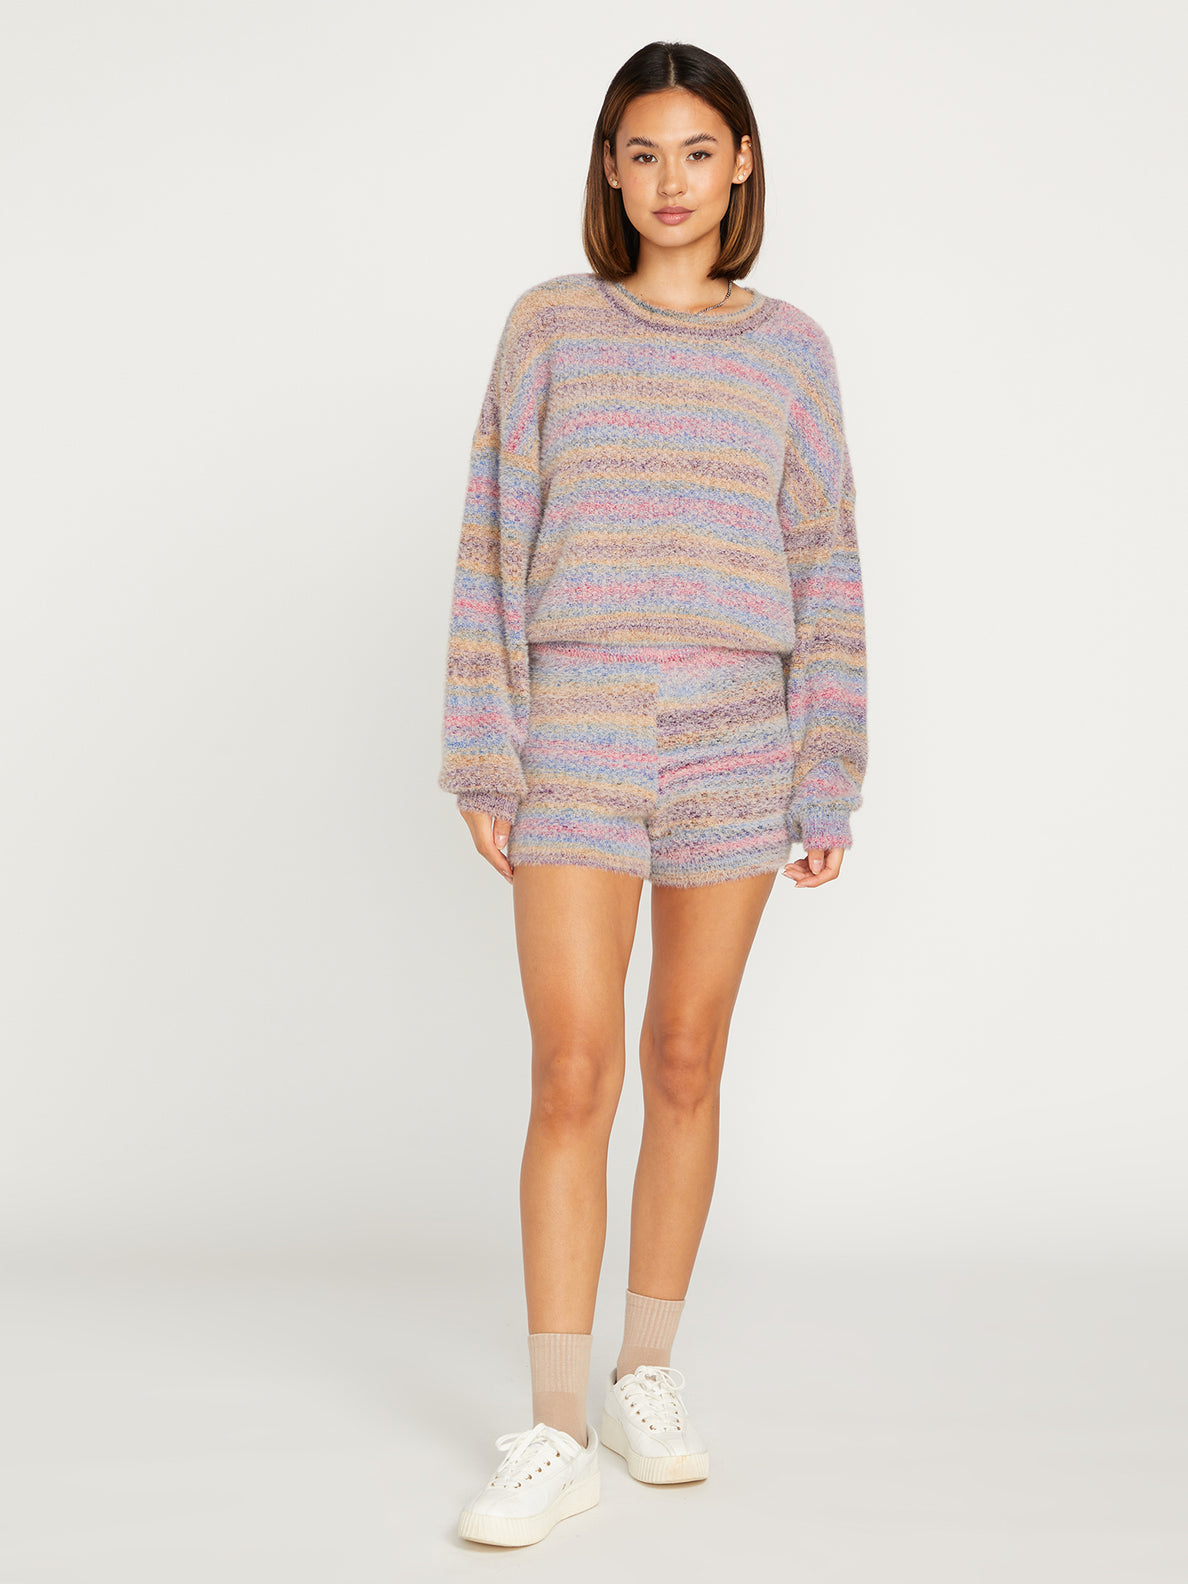 Quween Beach Sweater - Multi